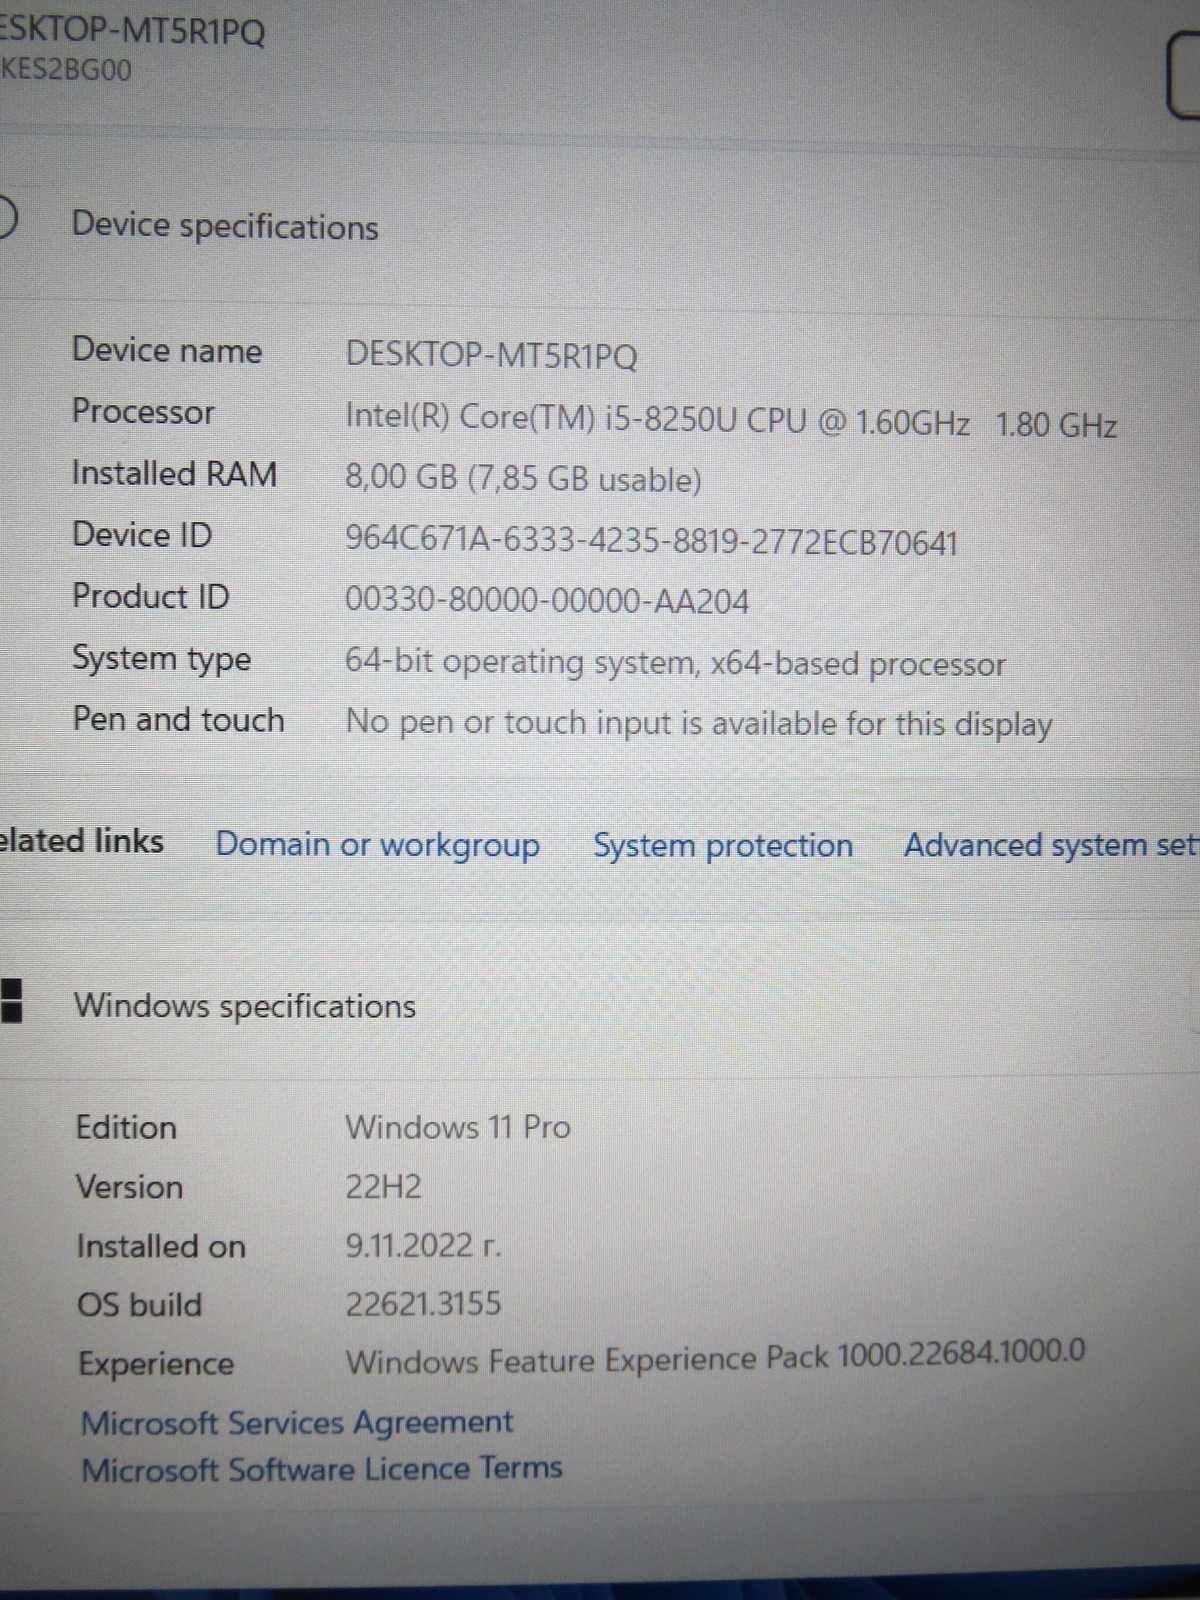 Lenovo ThinkPad X280 FHD IPS/i5 8250U/SSD 256GB/ 8GB/USB-C